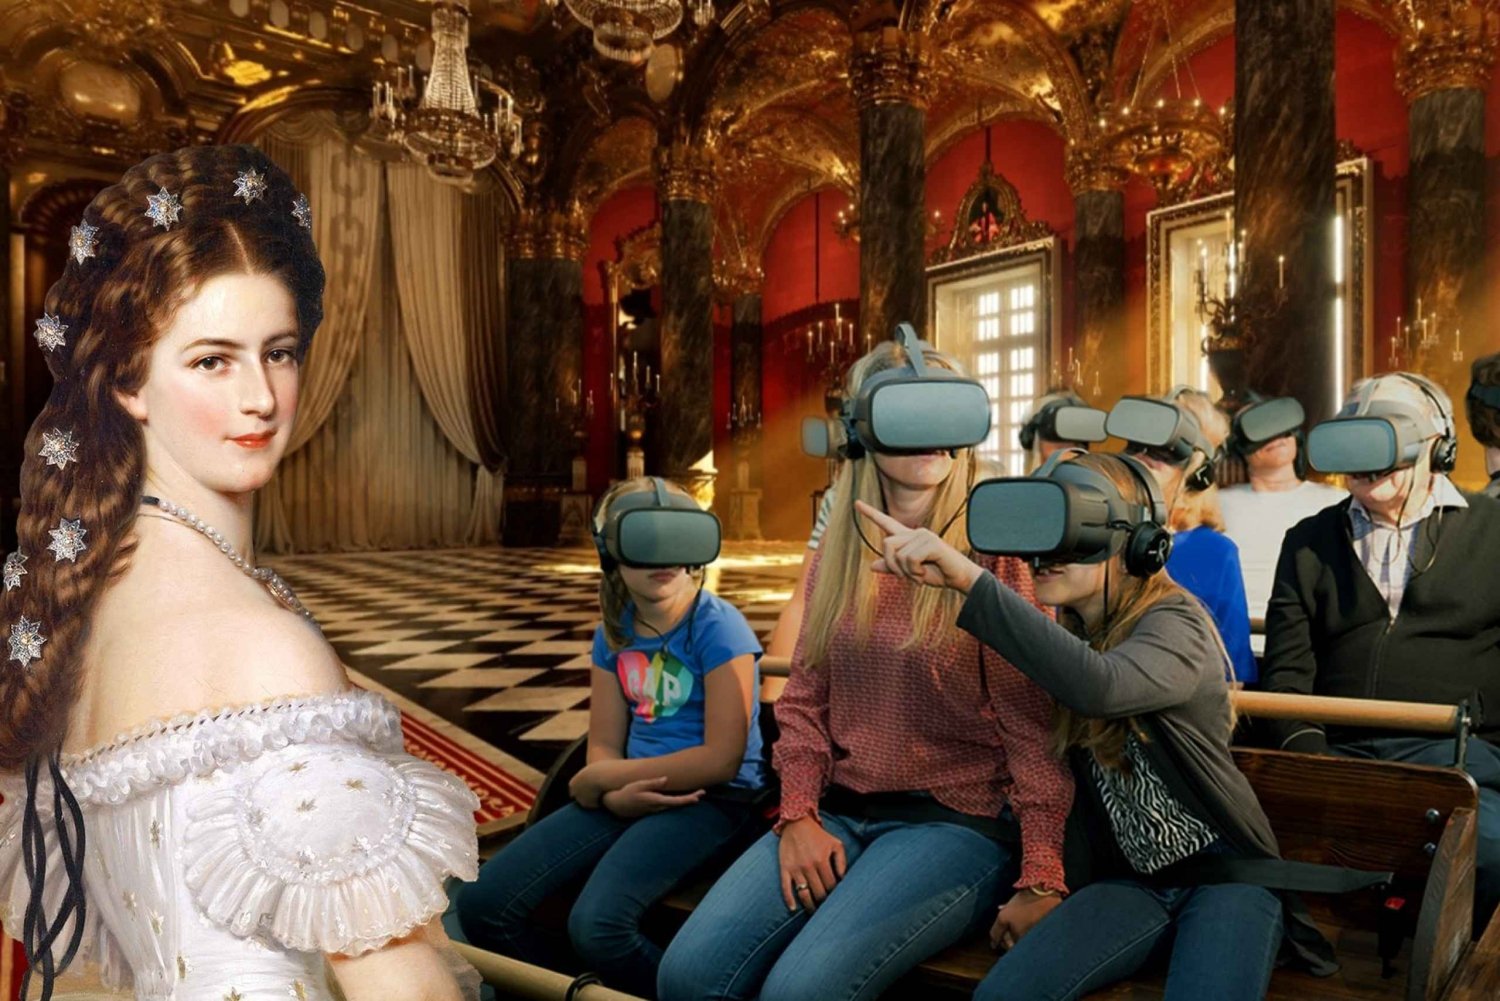 Wenen: 'Sisi's geweldige reis' Virtual Reality-ervaring